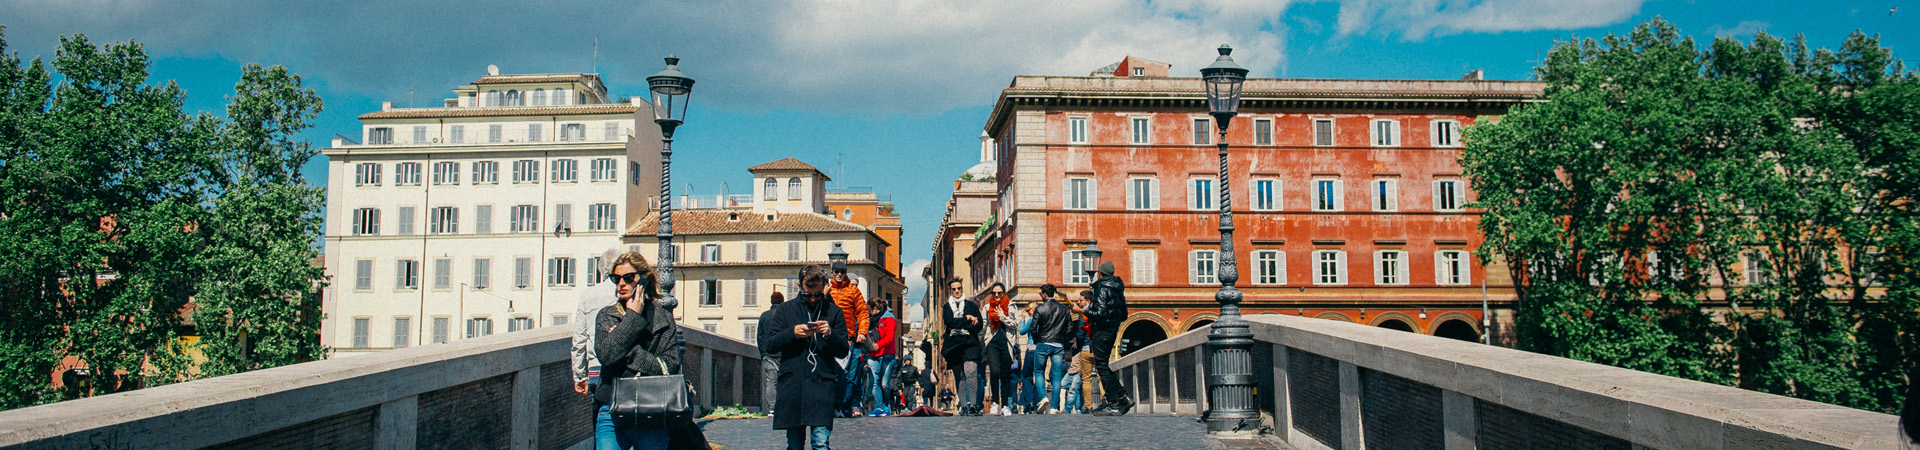 Undergraduate Housing | John Cabot University | Rome